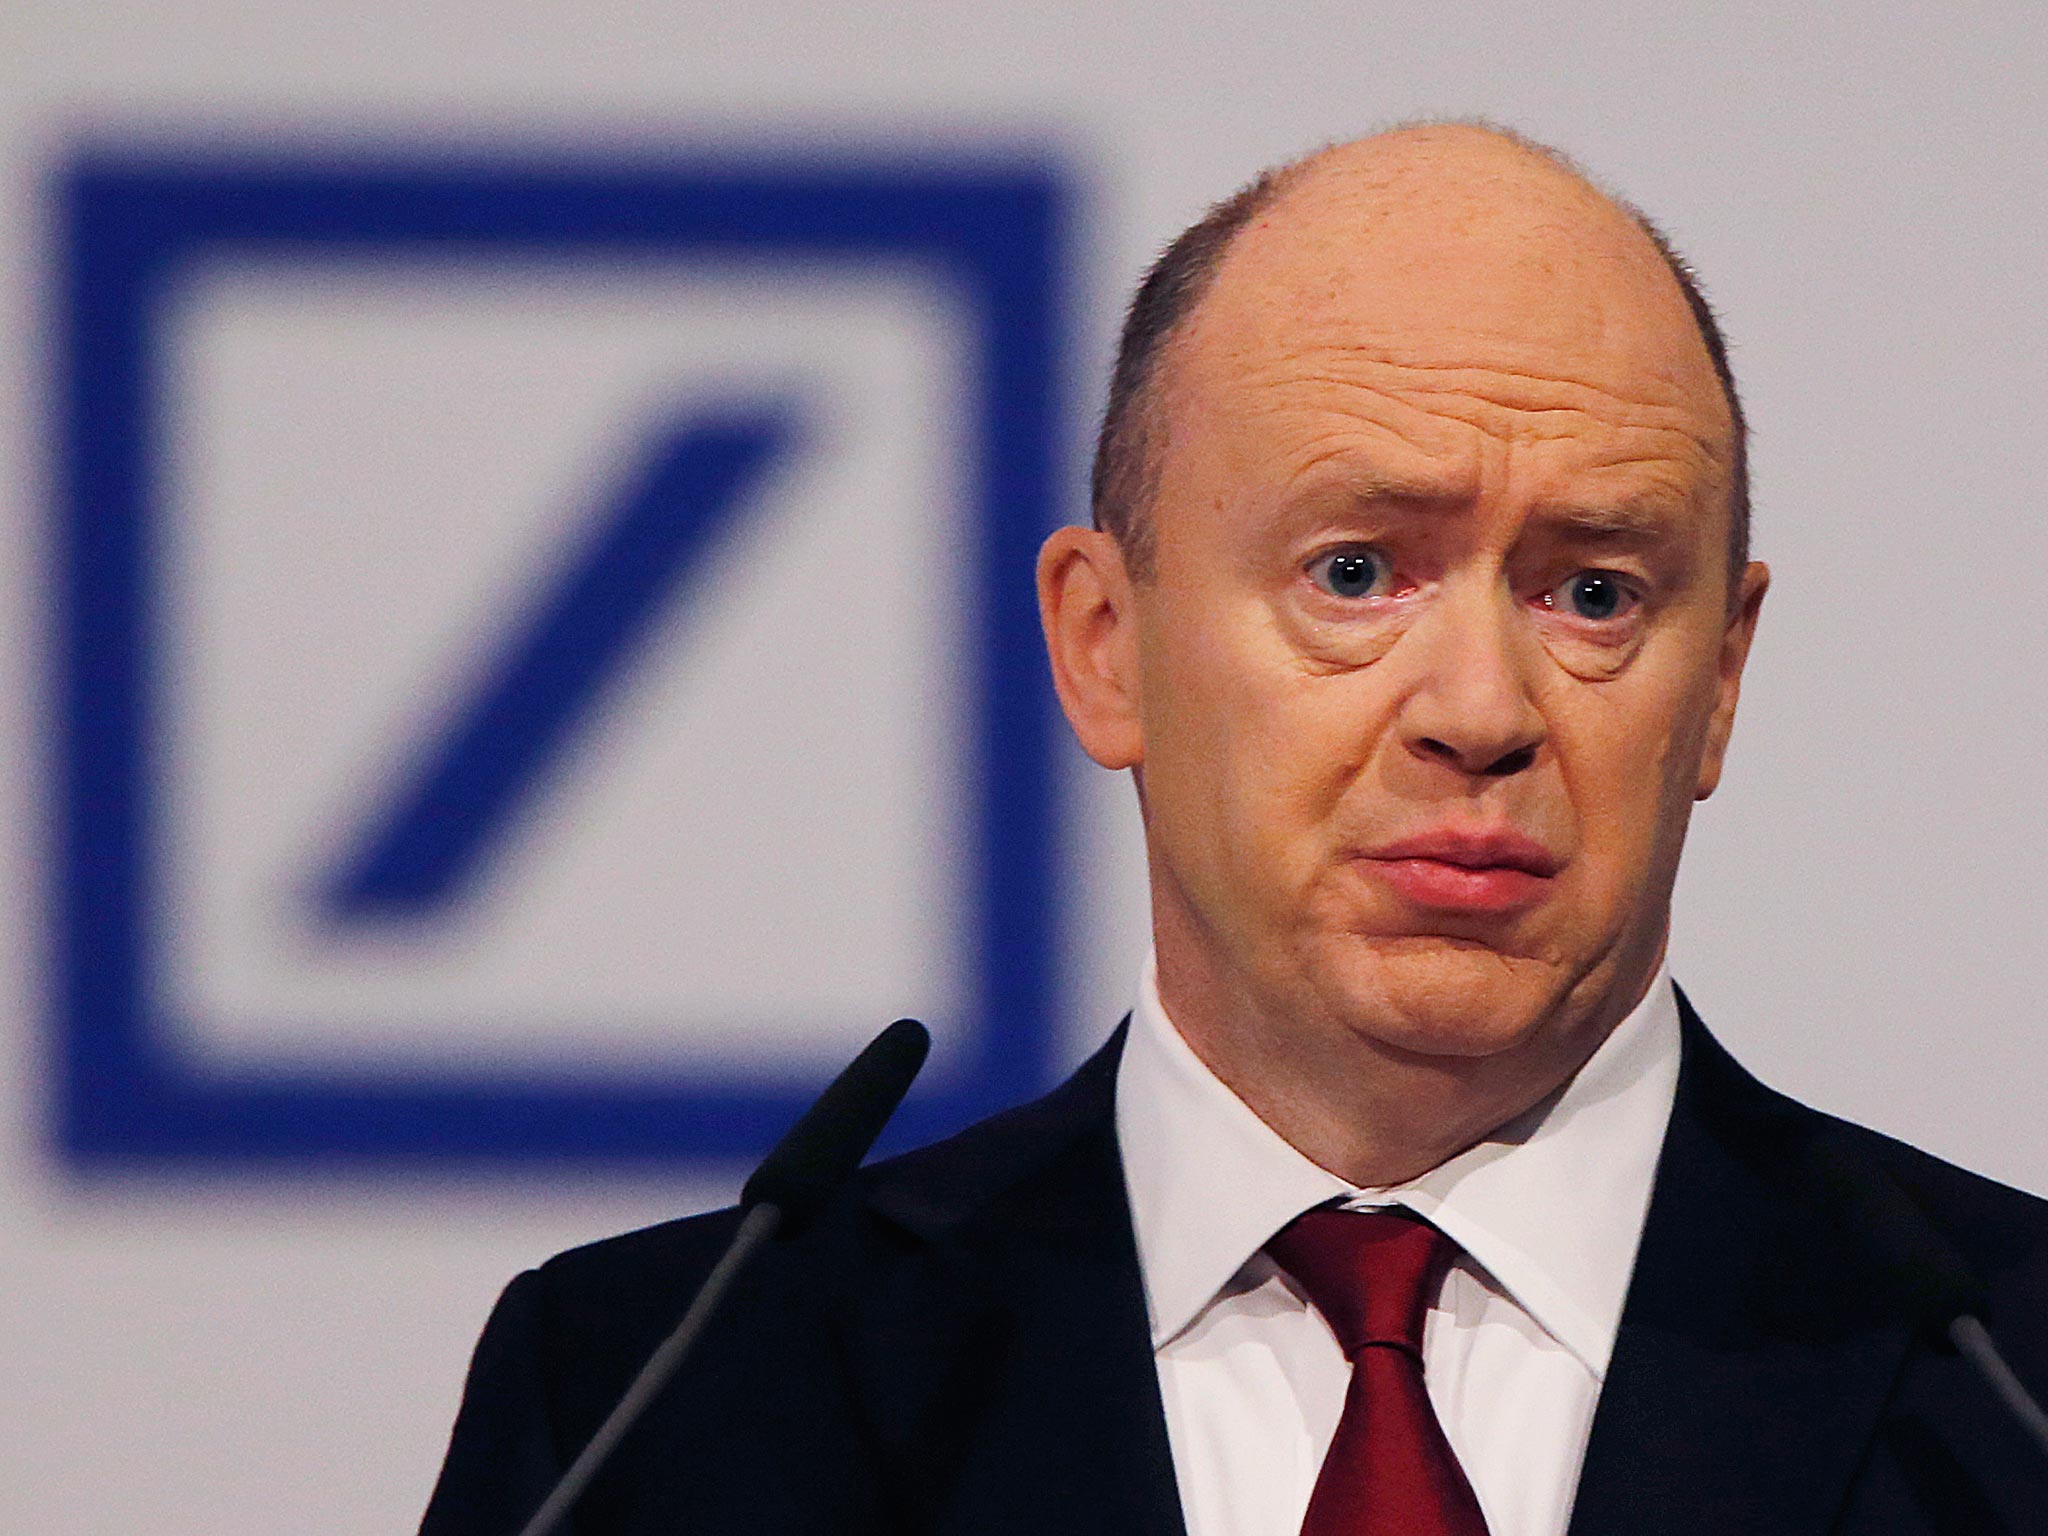 Deutsche chief executive John Cryan told senior staff they wouldn't get a cash bonus this year